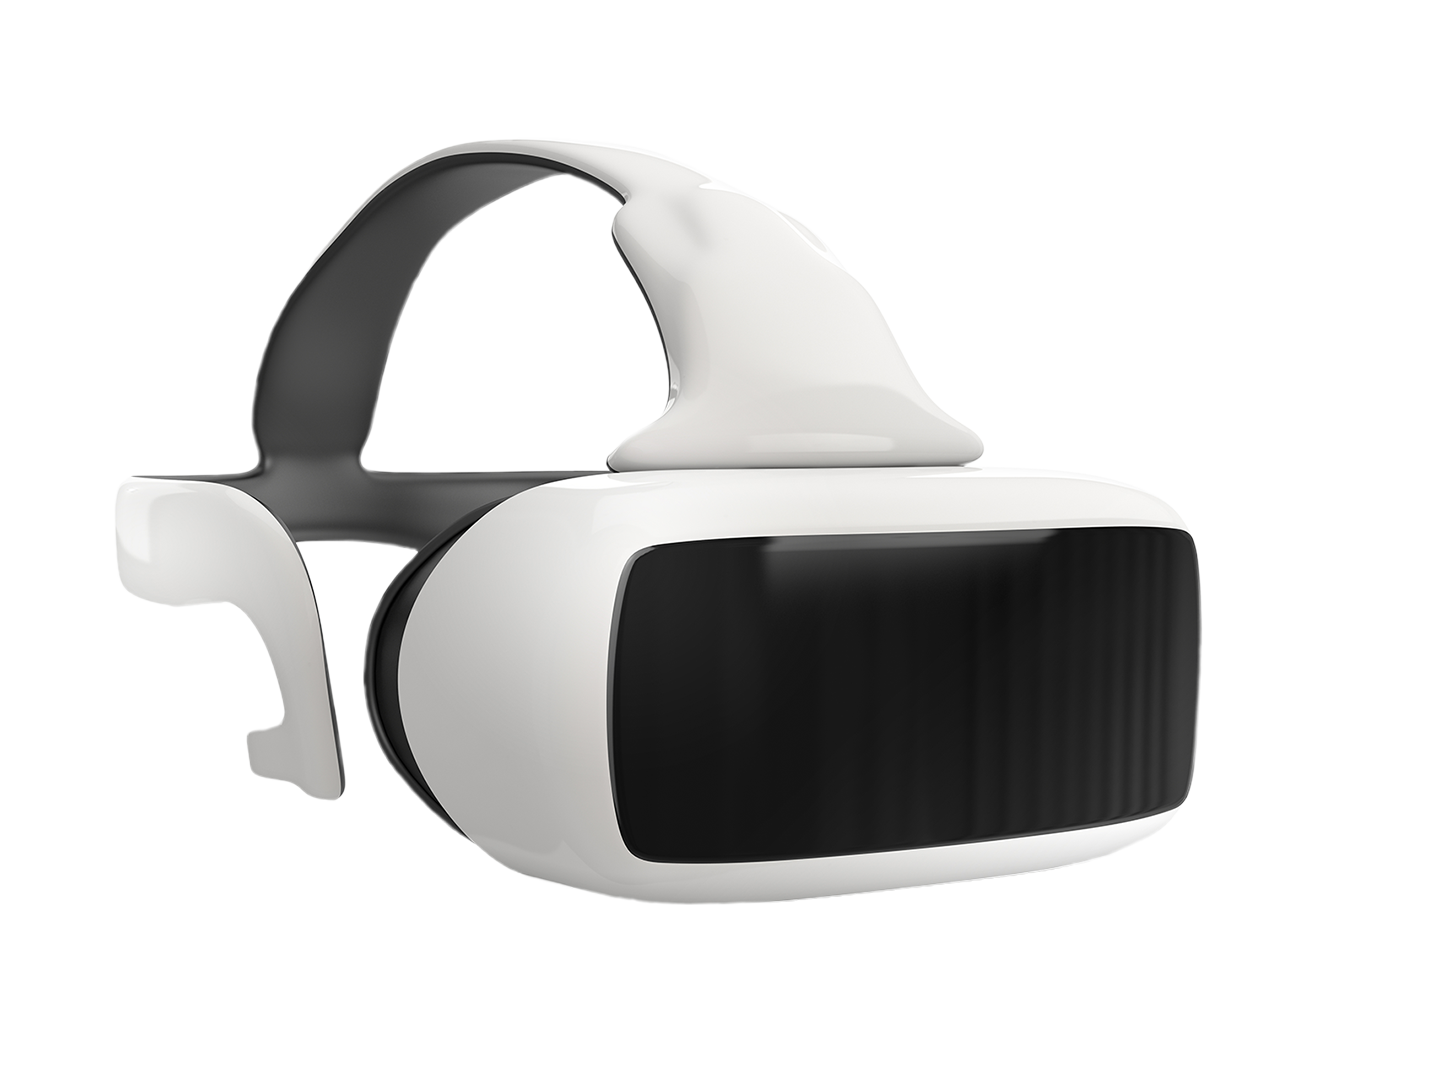 Virtual Reality Reality Based Group